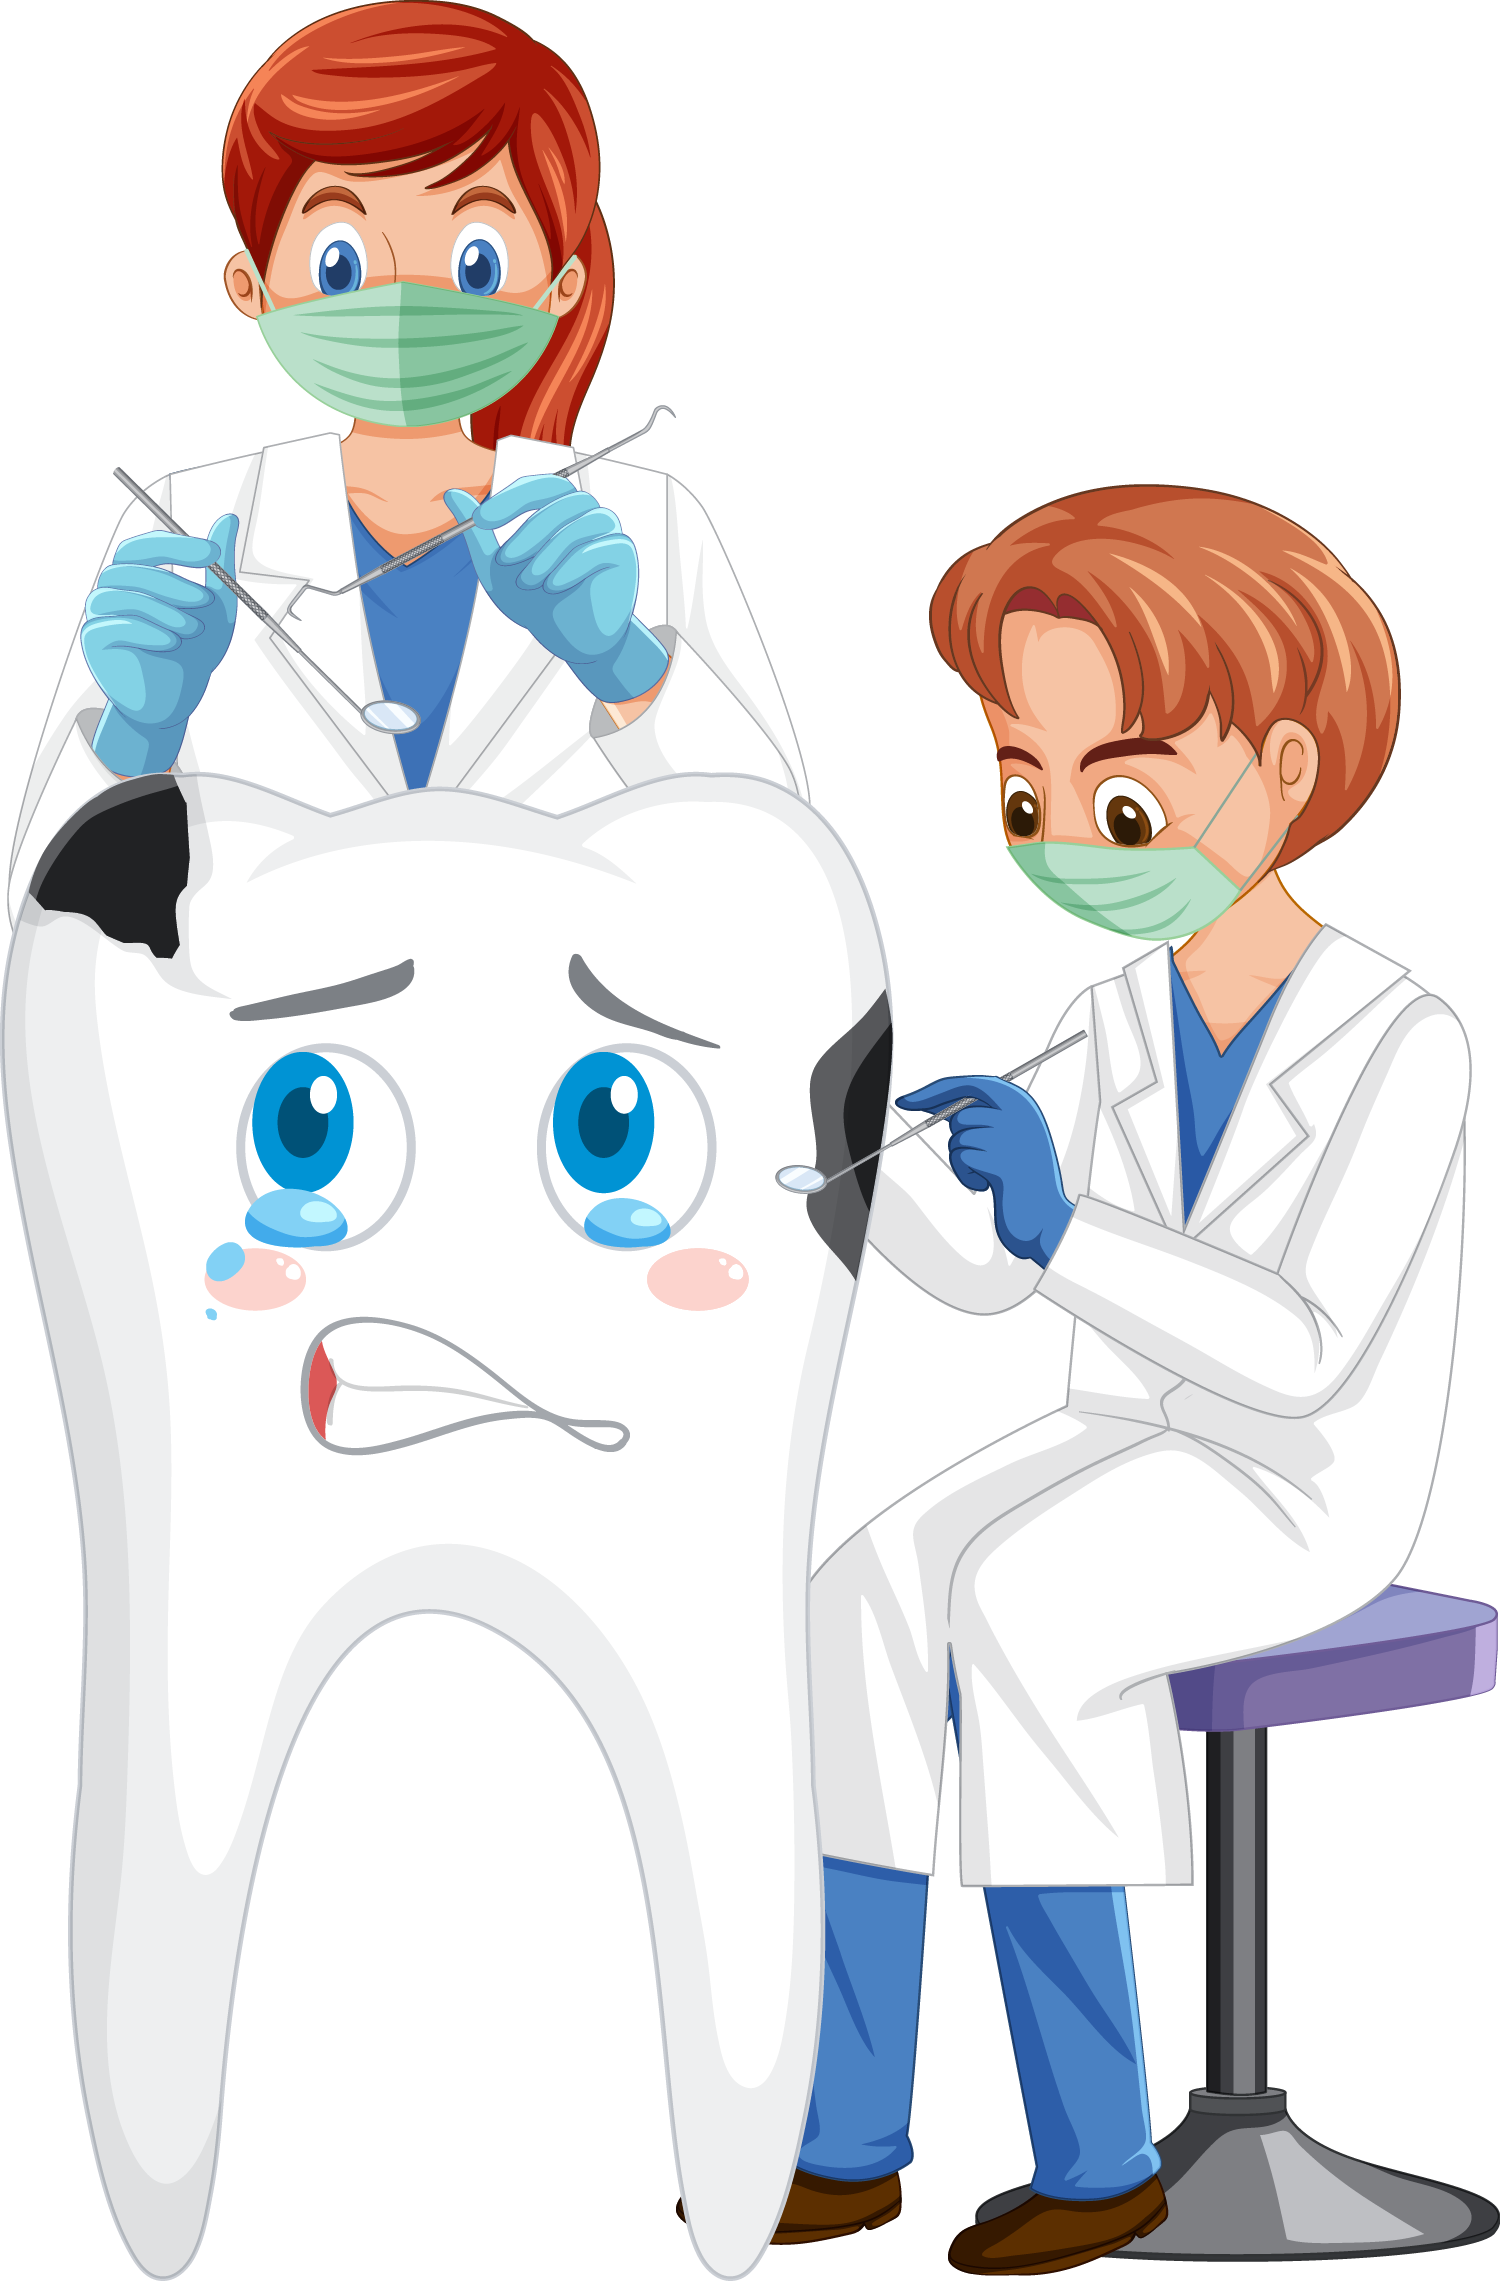 Dentist check teeth